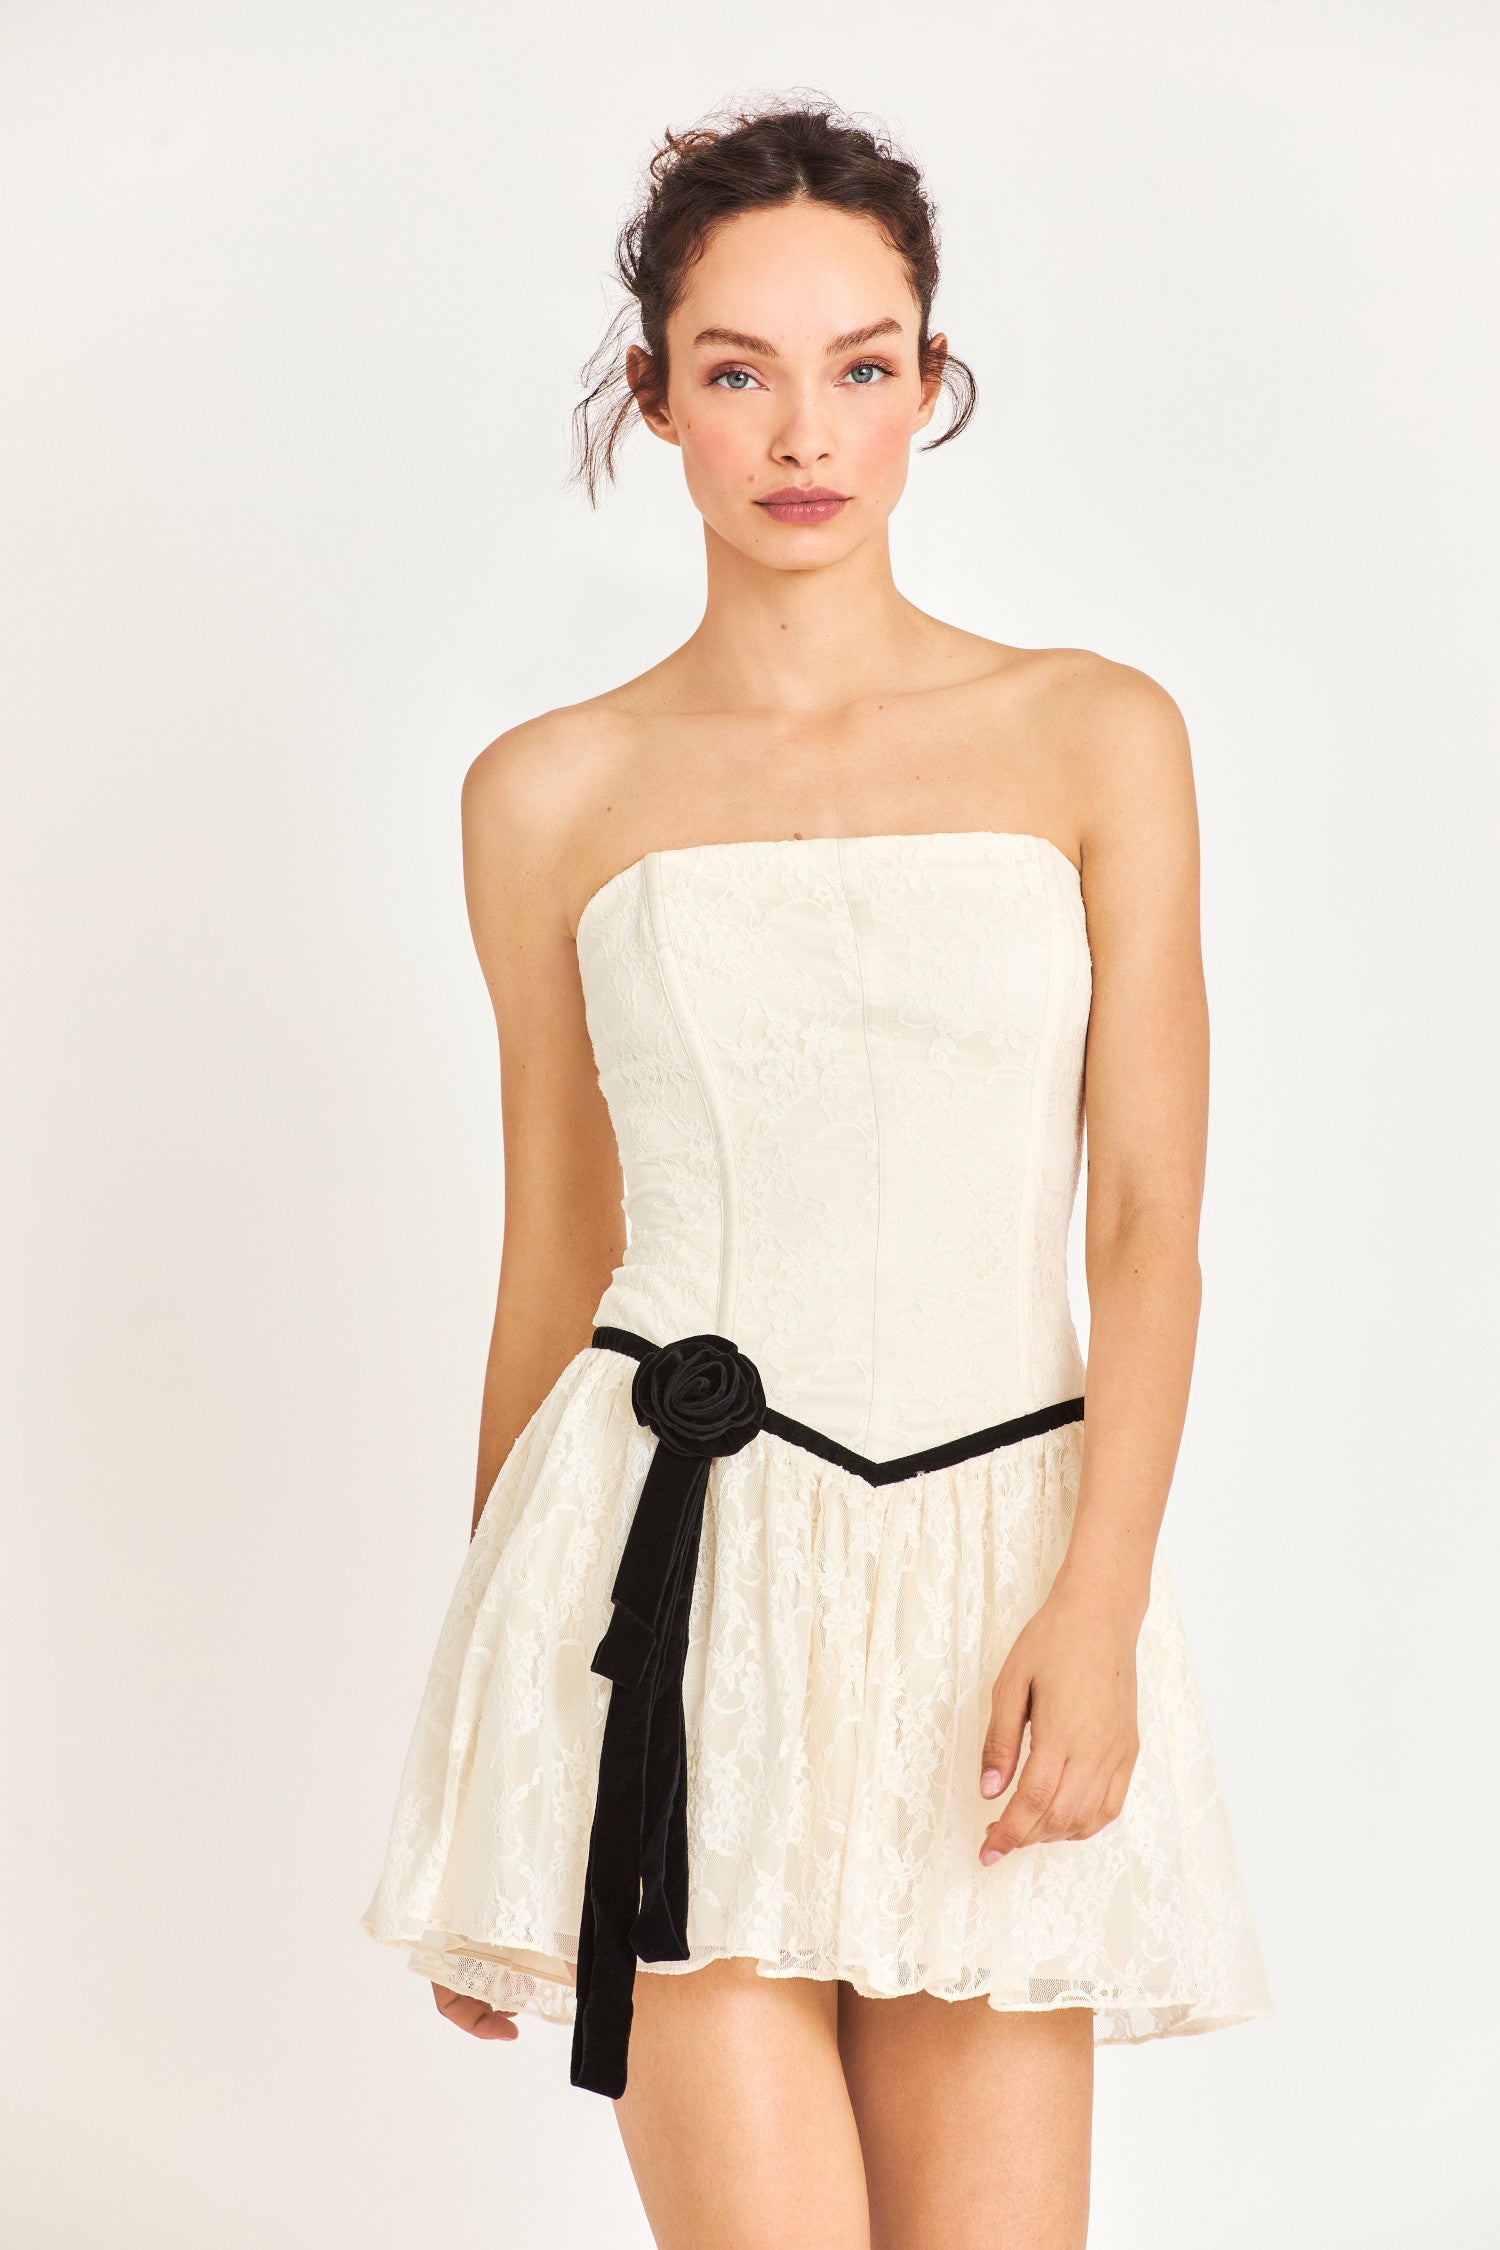 Model wearing white strapless mini dress with black flower detail